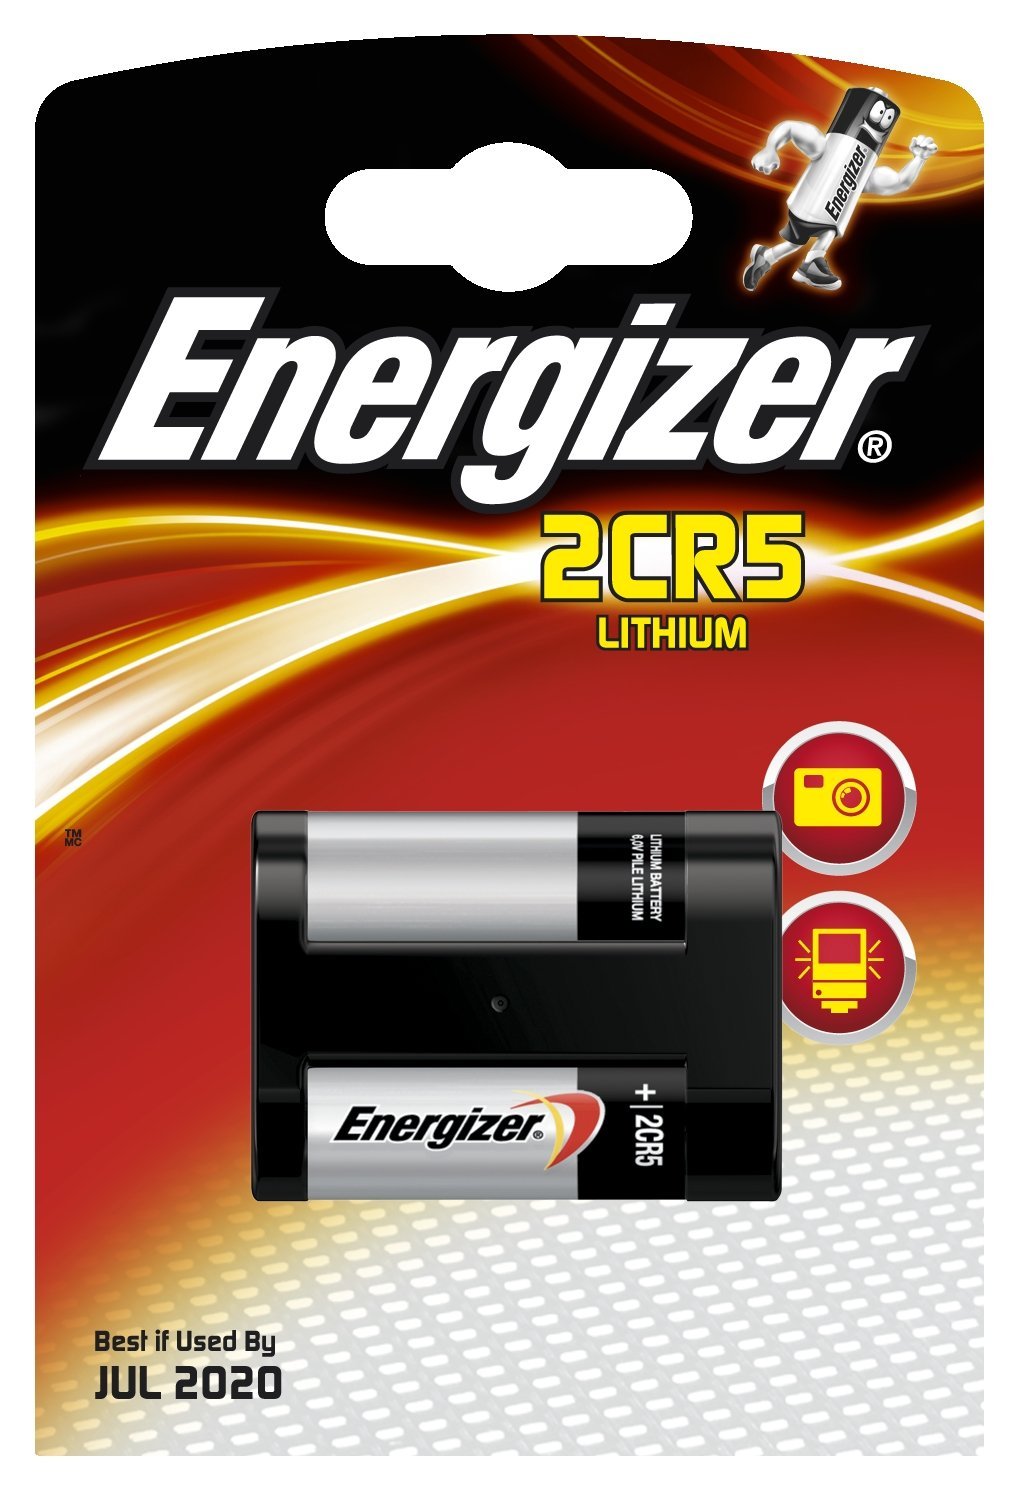 Energizer 2CR5 Battery